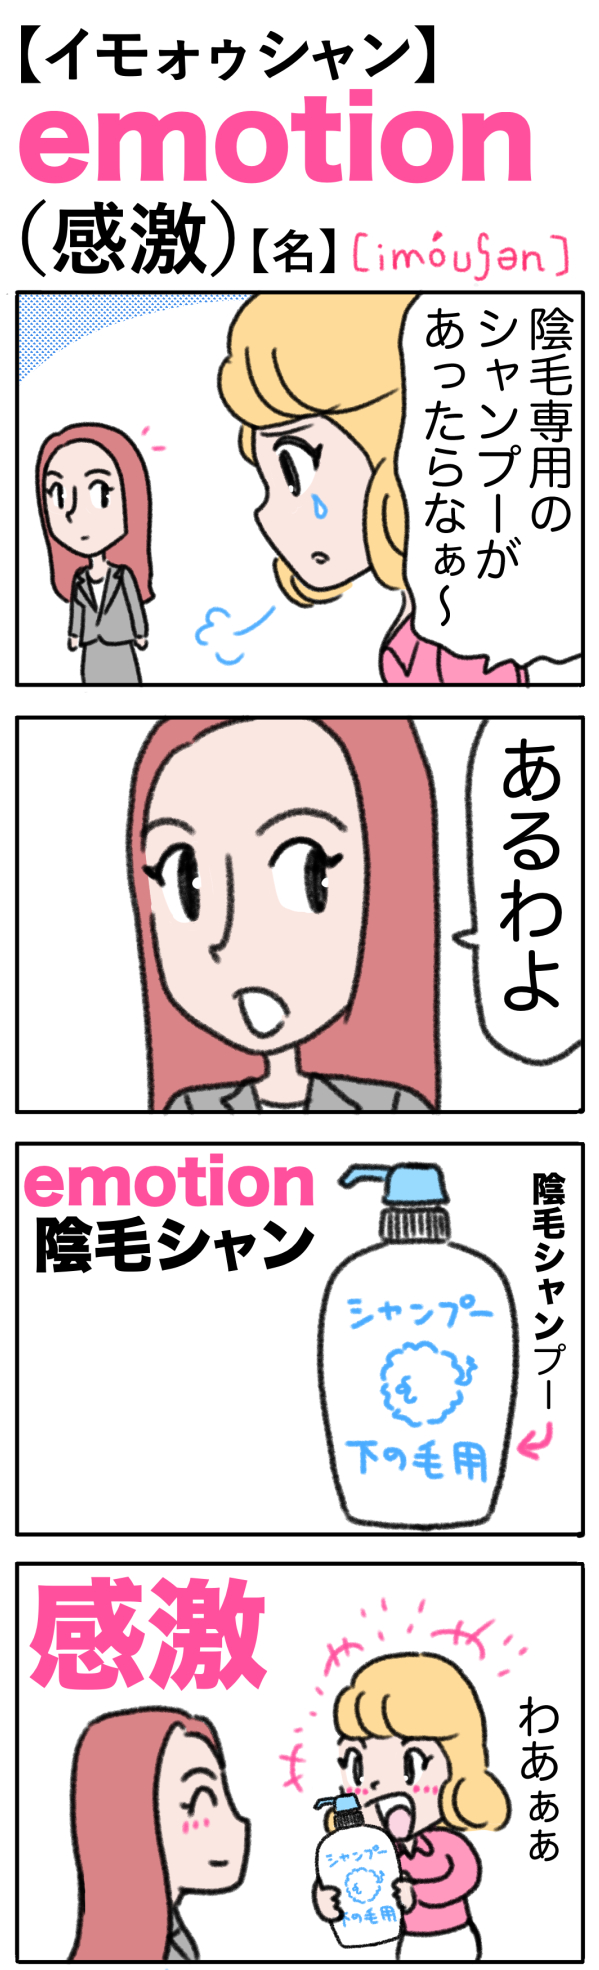 emotion（感激）の語呂合わせ英単語